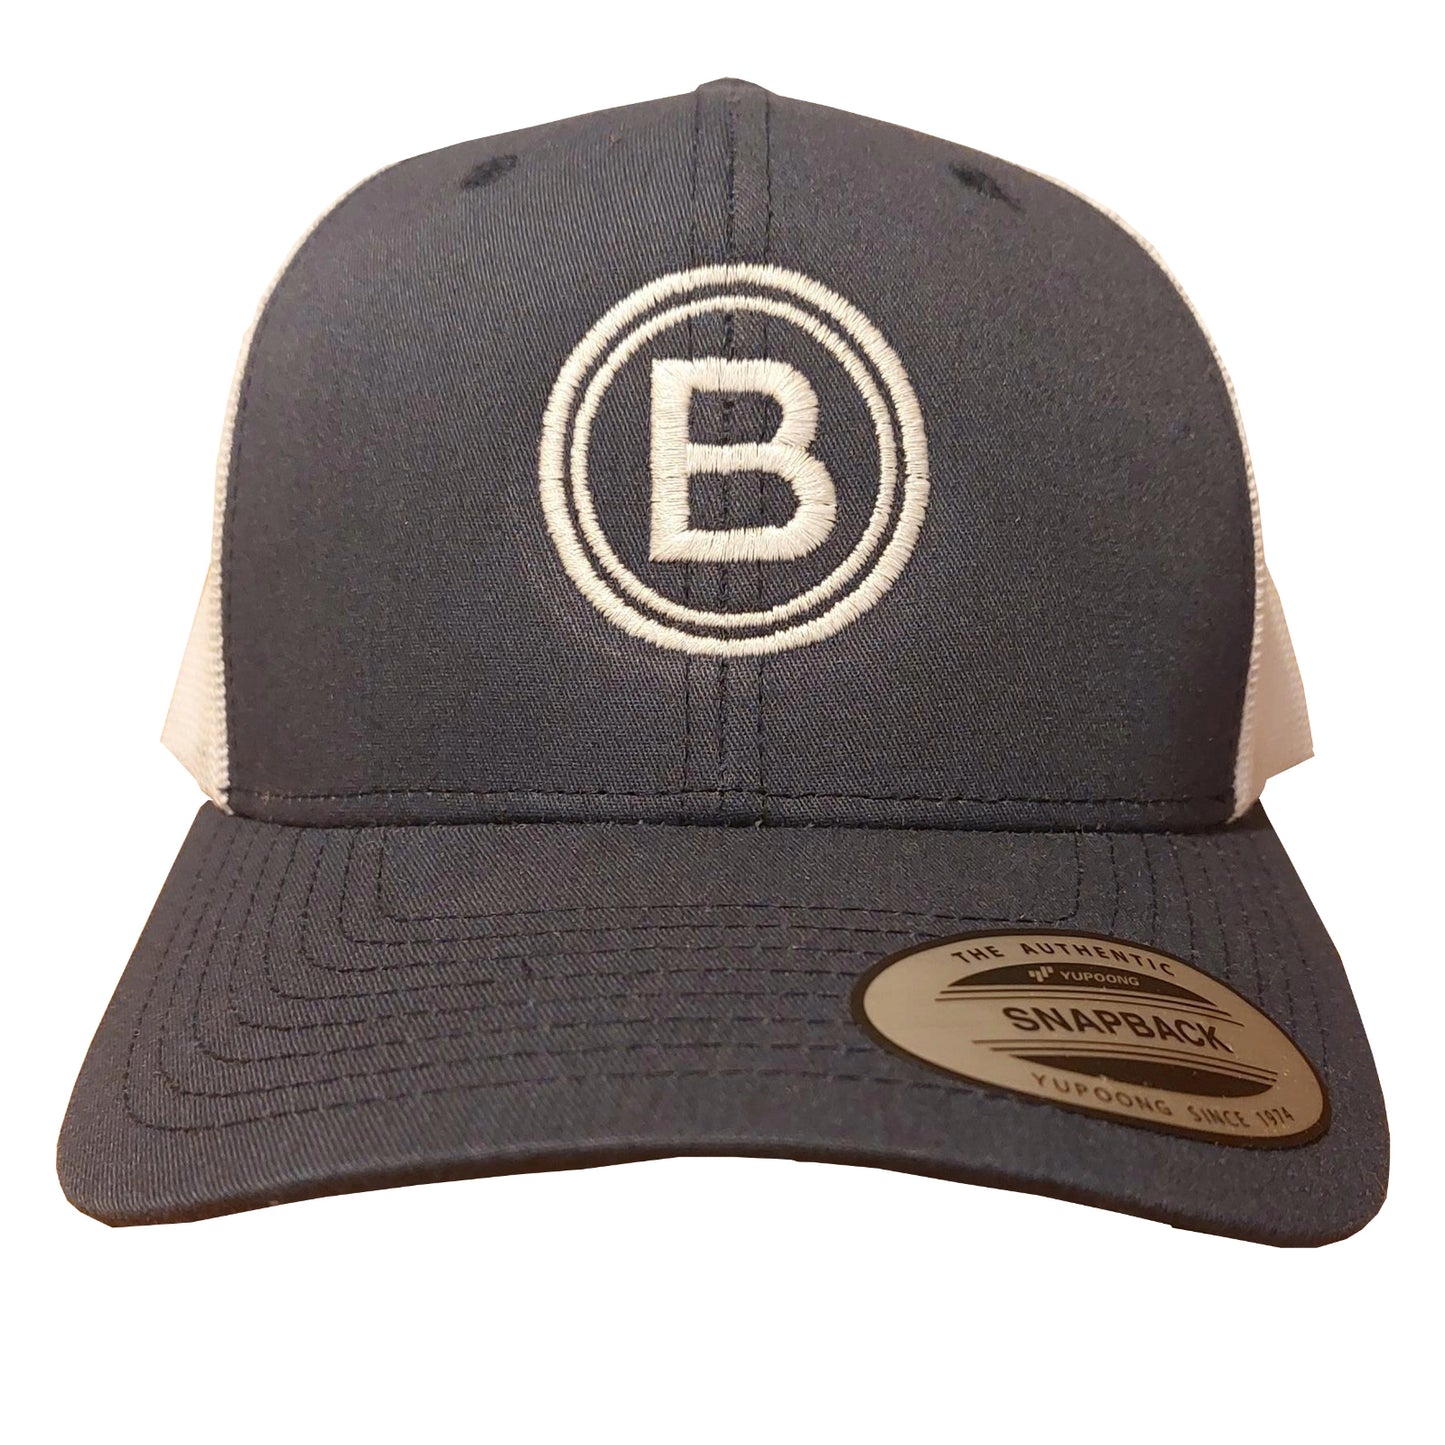 Bowman Trucker Caps